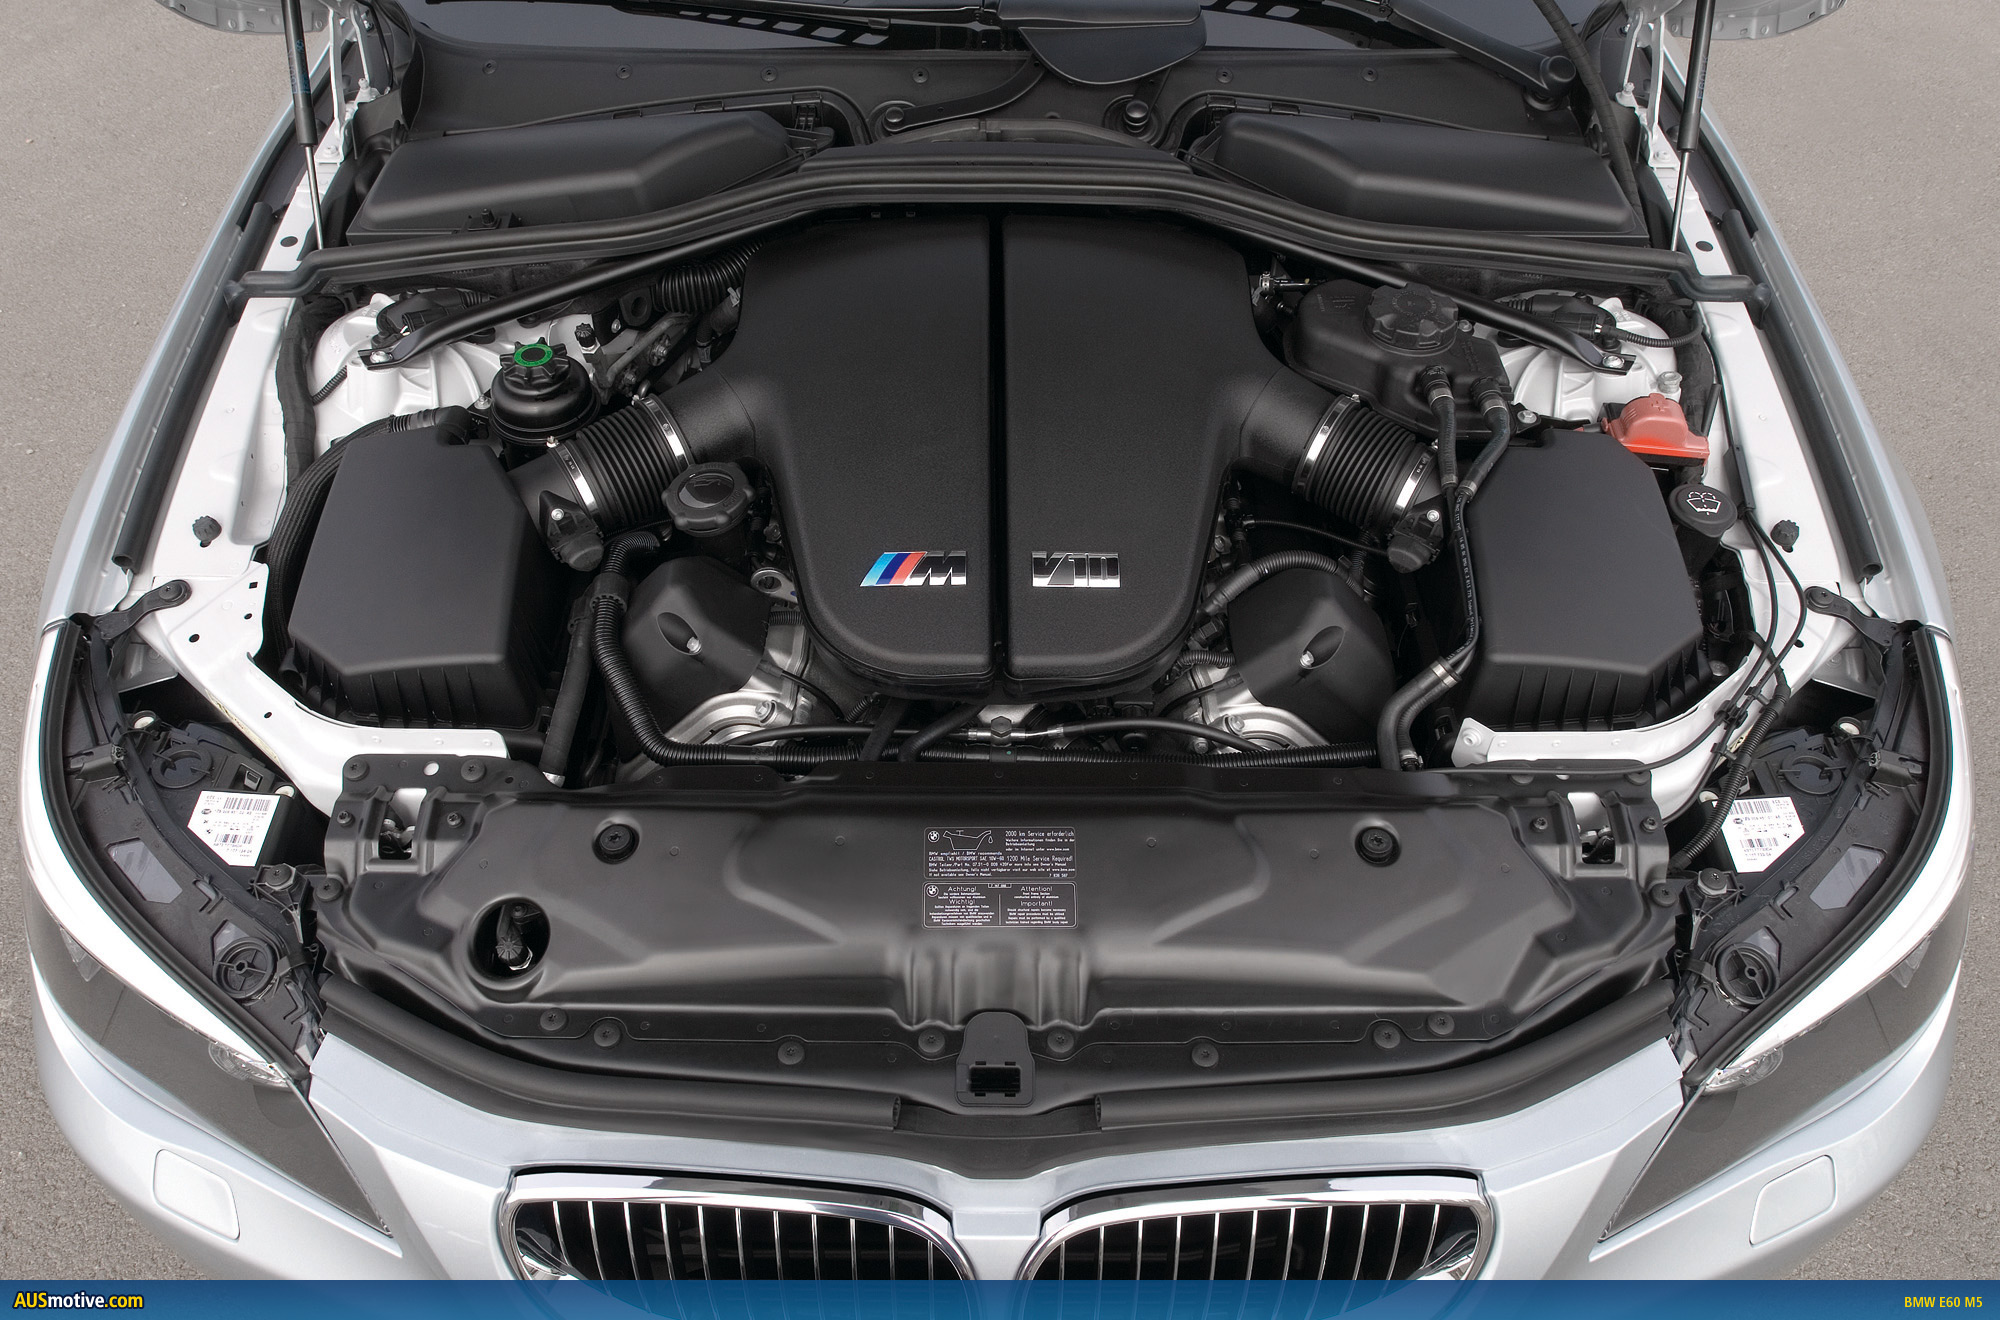 » Last hurrah for BMW E60 M5